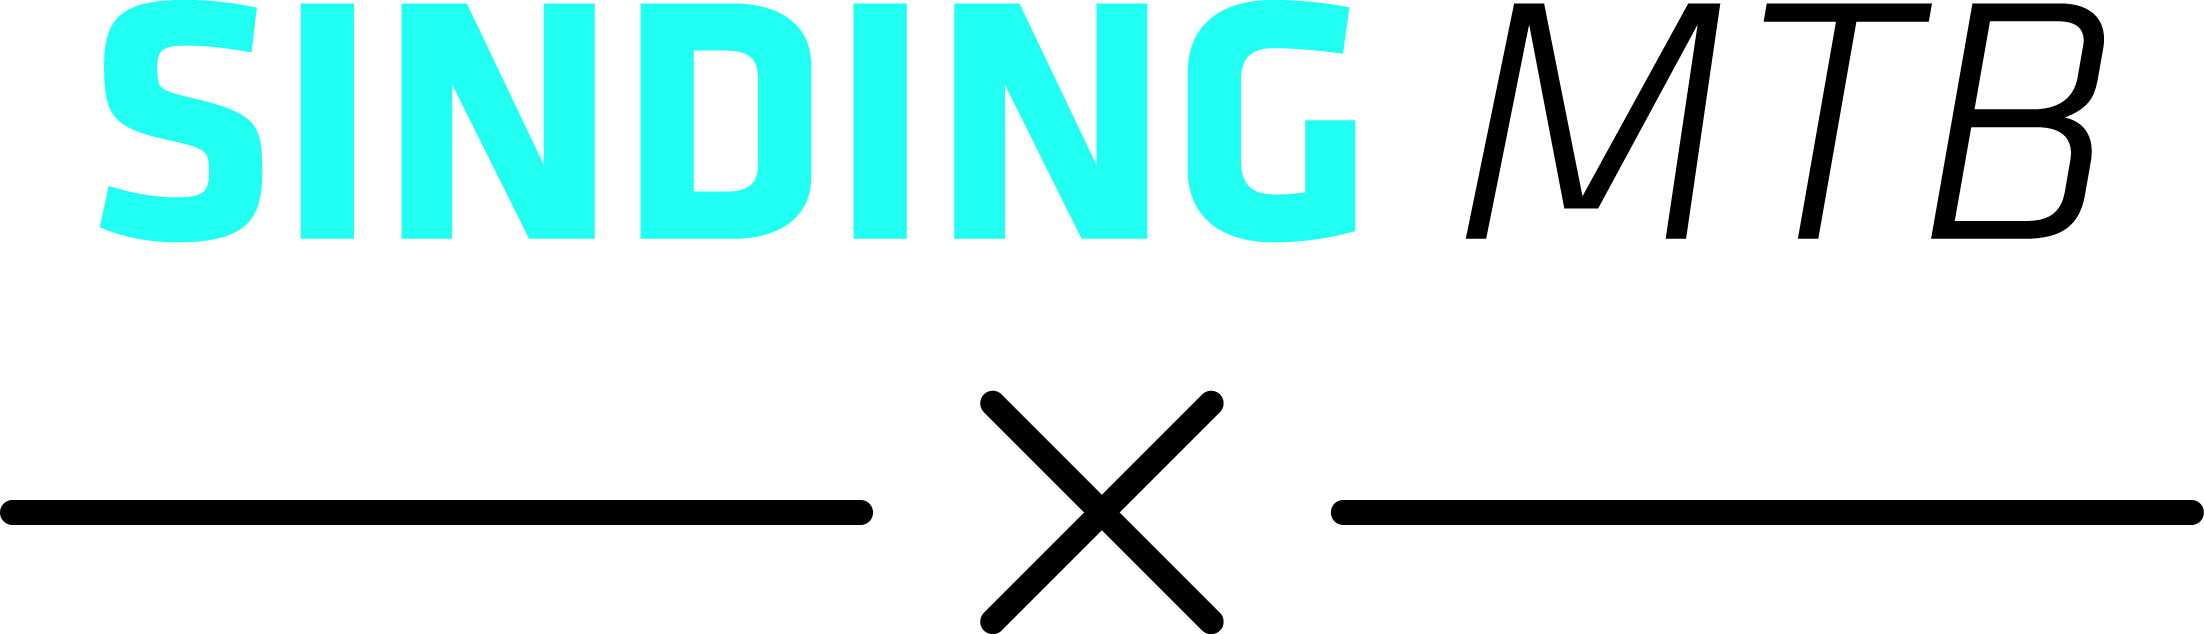 sinding-mtb-logo